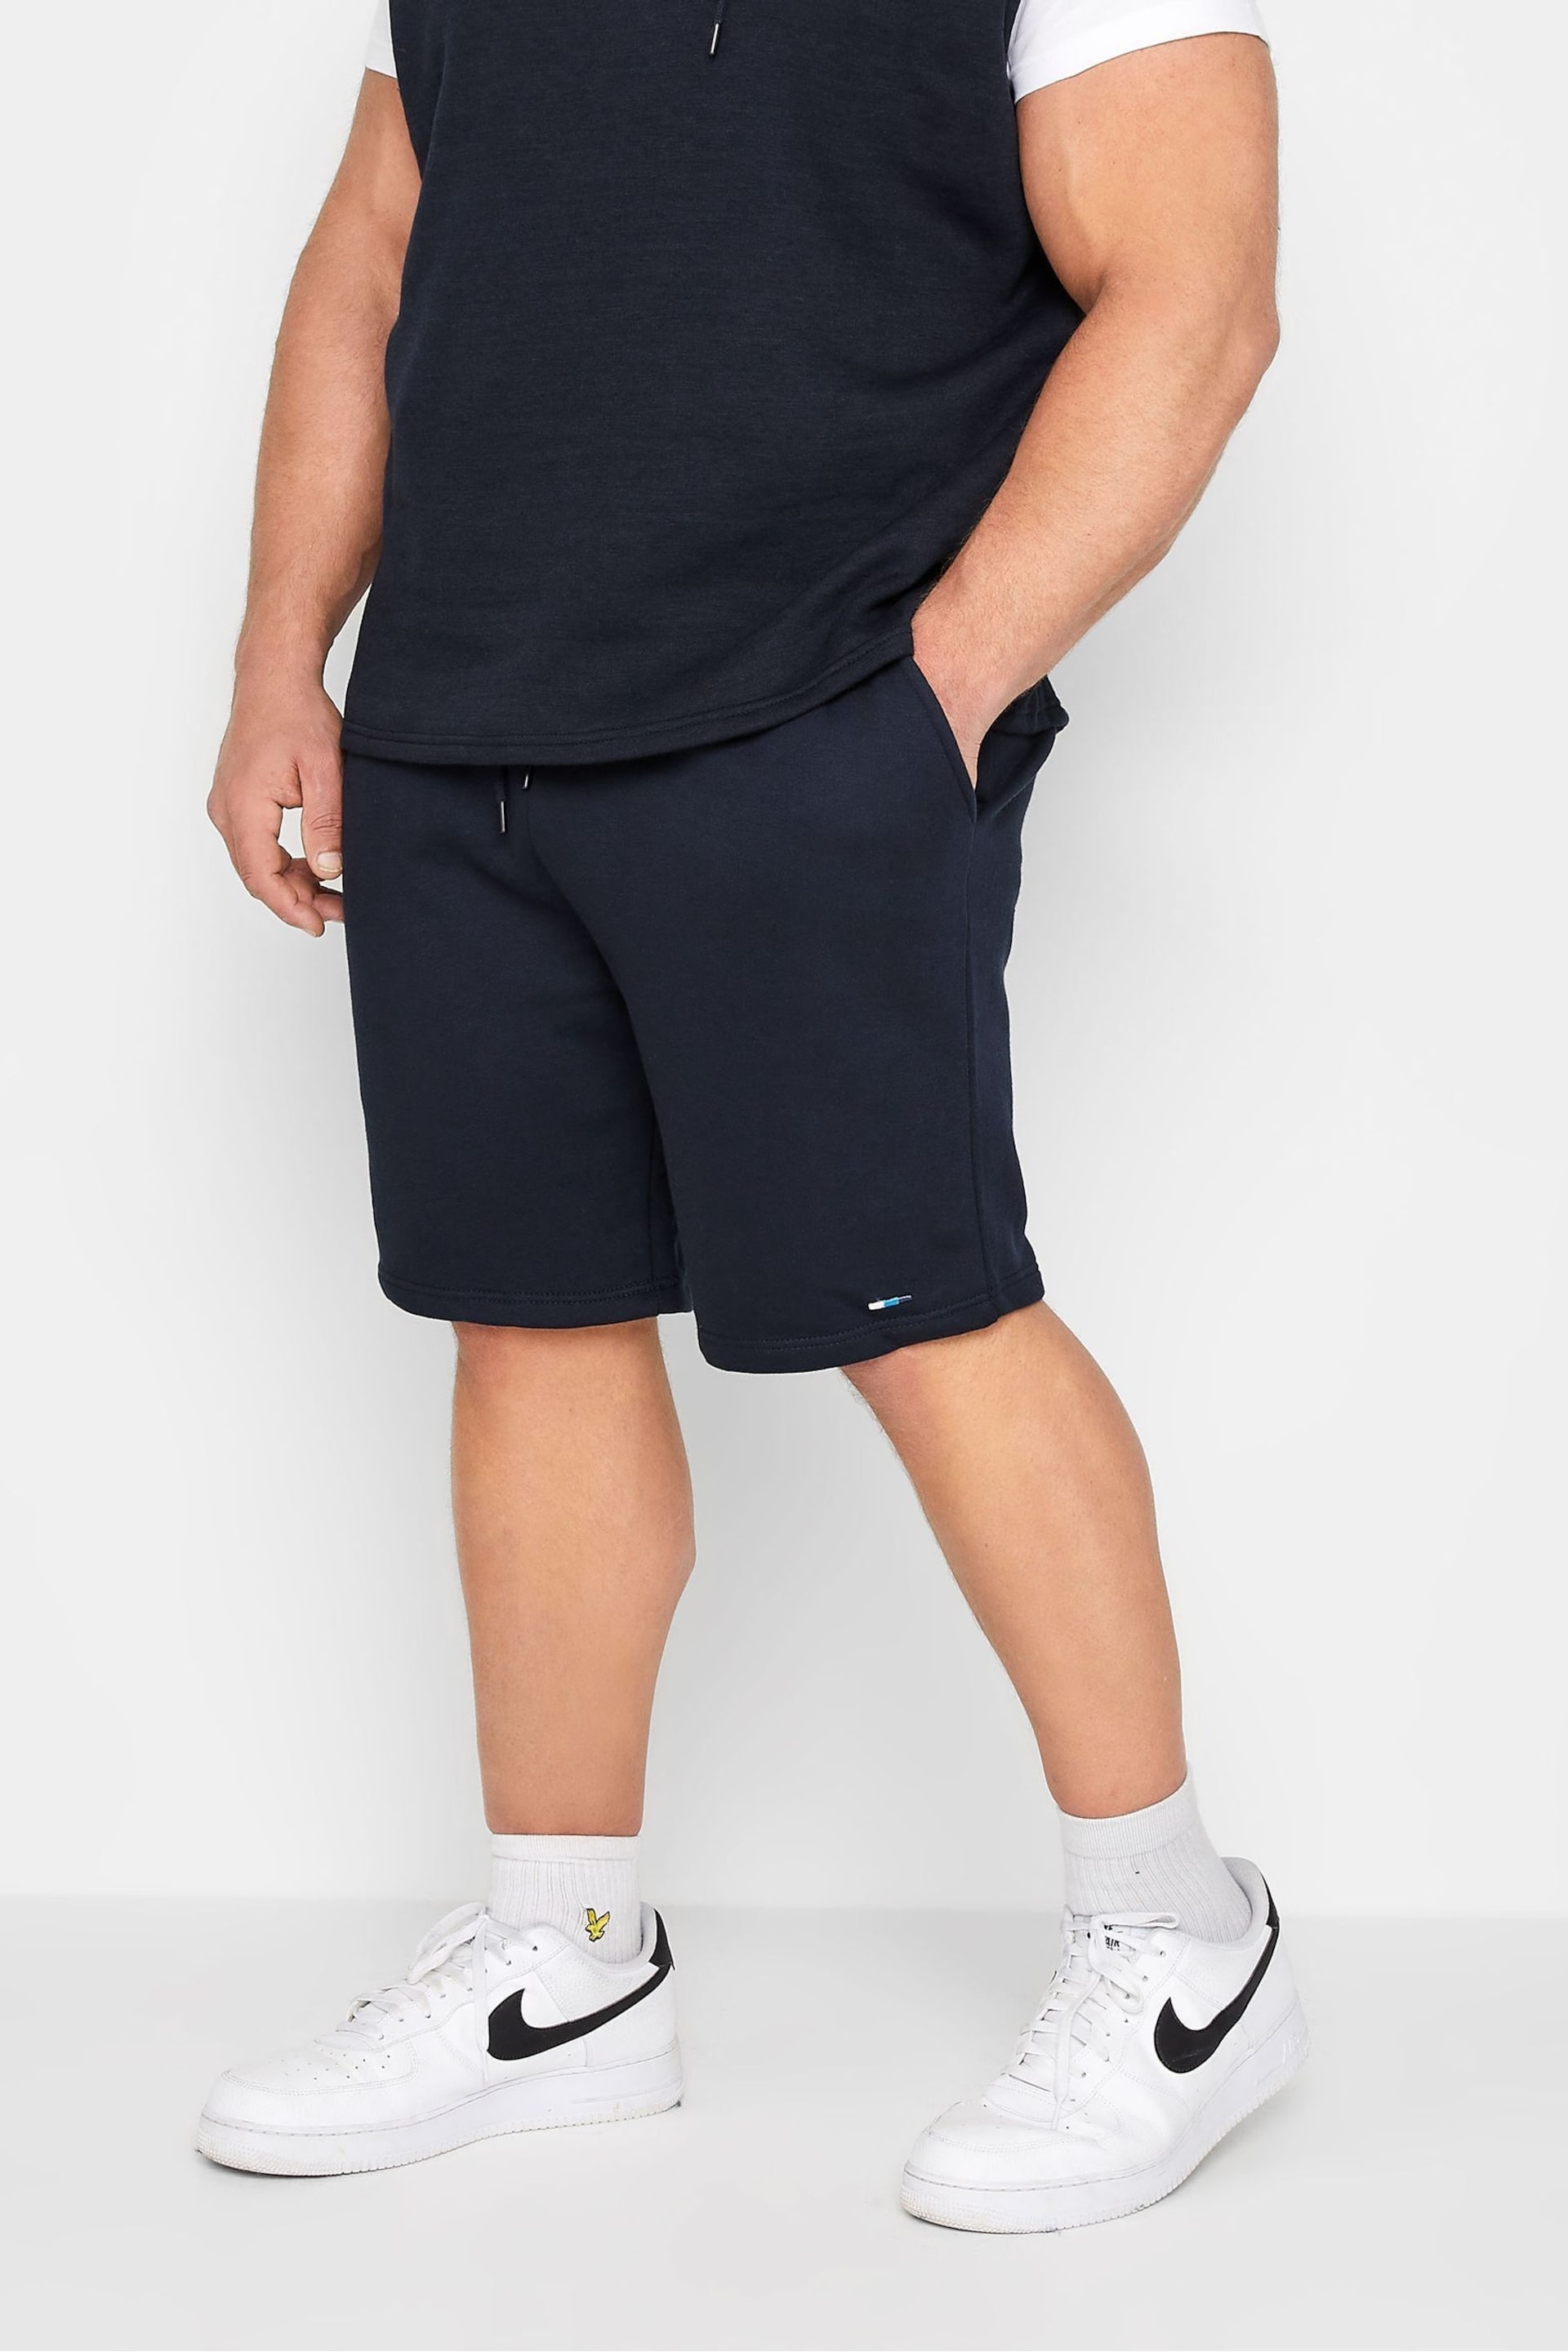 BadRhino Big & Tall Blue Jersey Shorts - Image 1 of 1